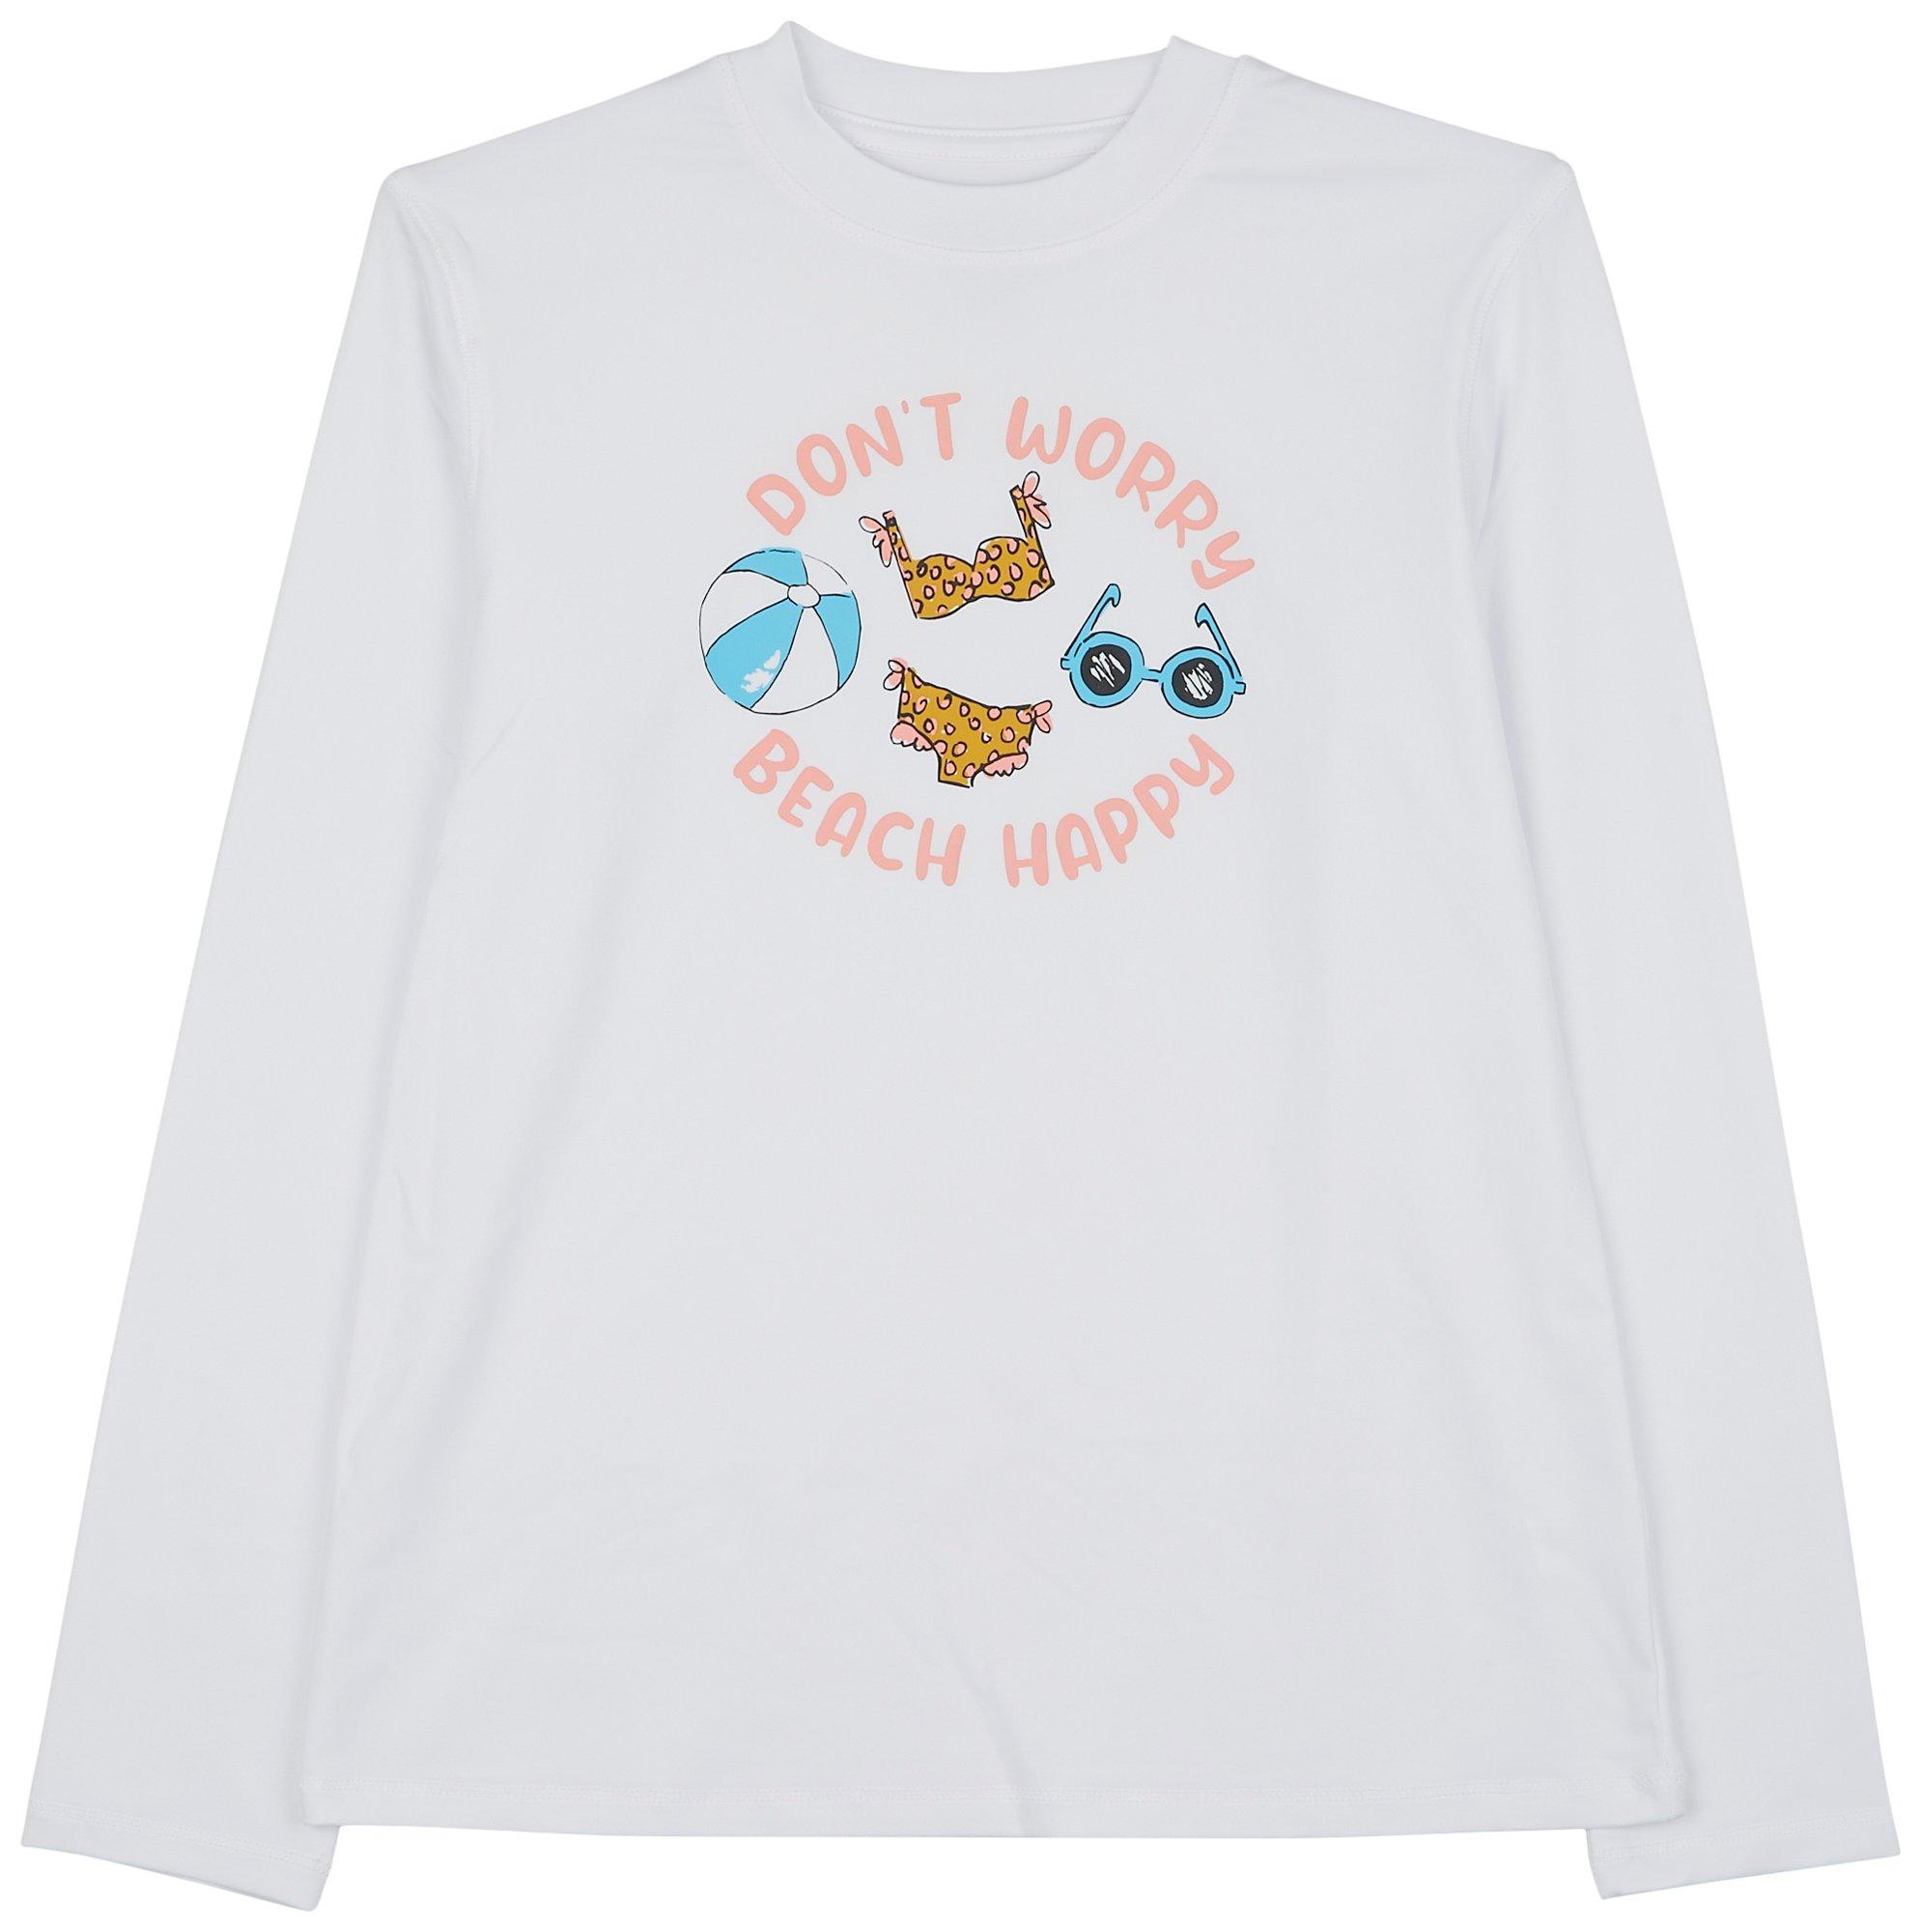 Toddler Girls Crew Graphic T-Shirt